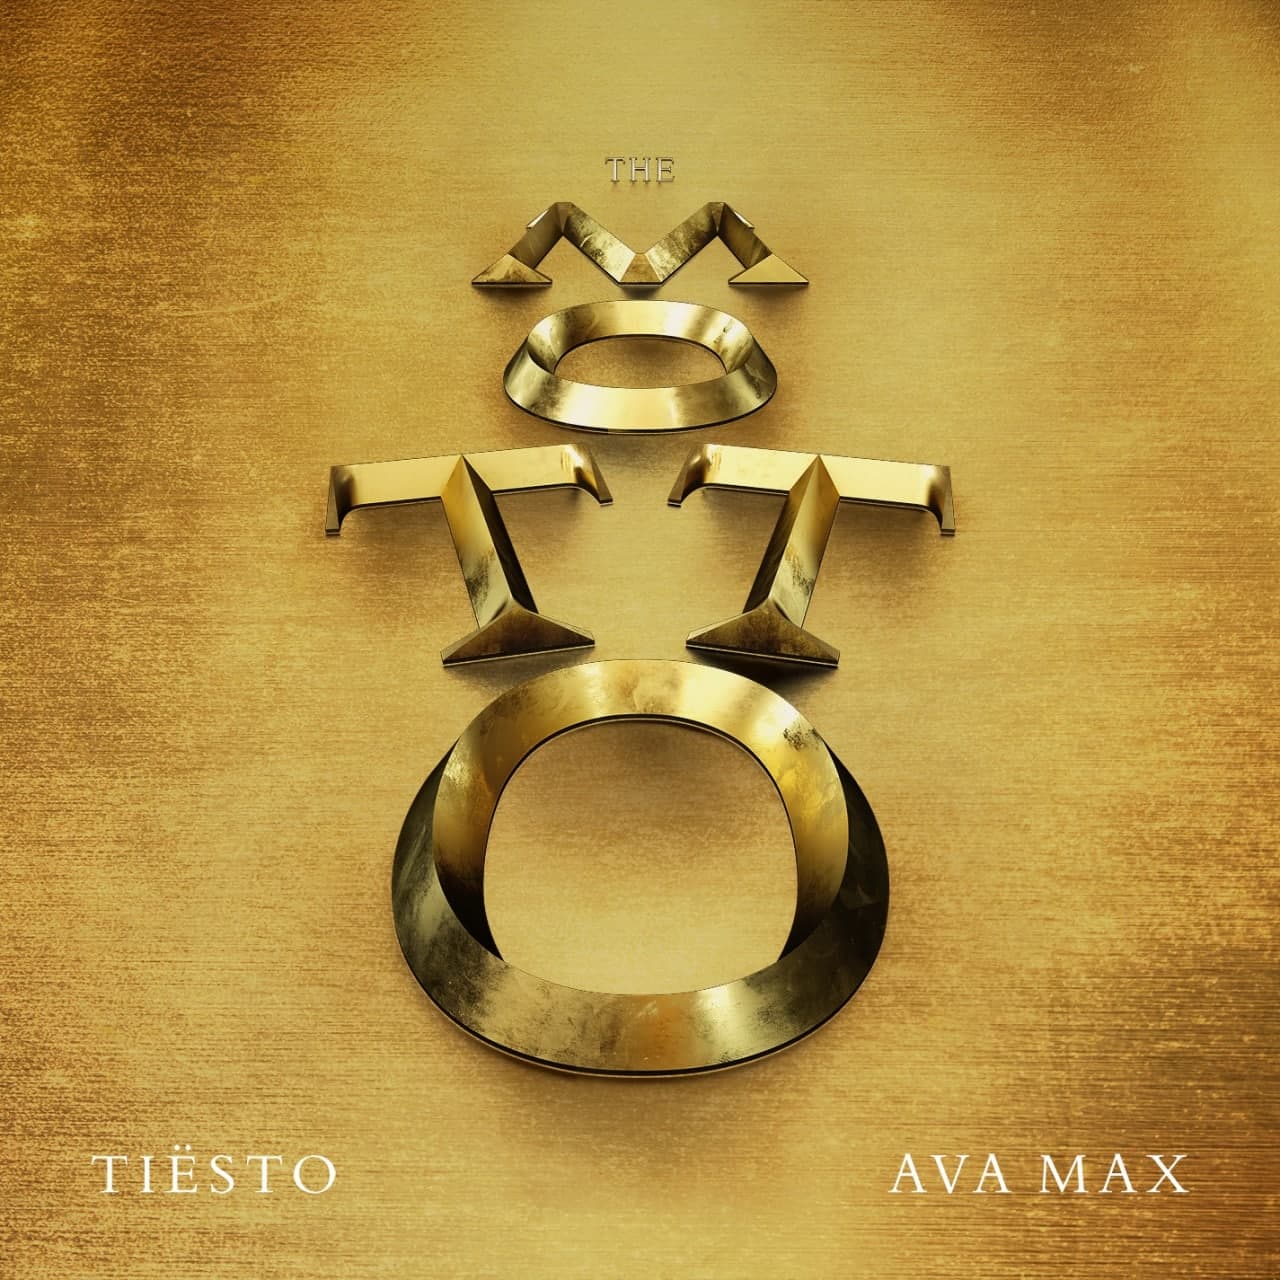 Tiesto & Ava Max - The Motto (Tiёsto’s New Year’s Eve Extended VIP Mix)